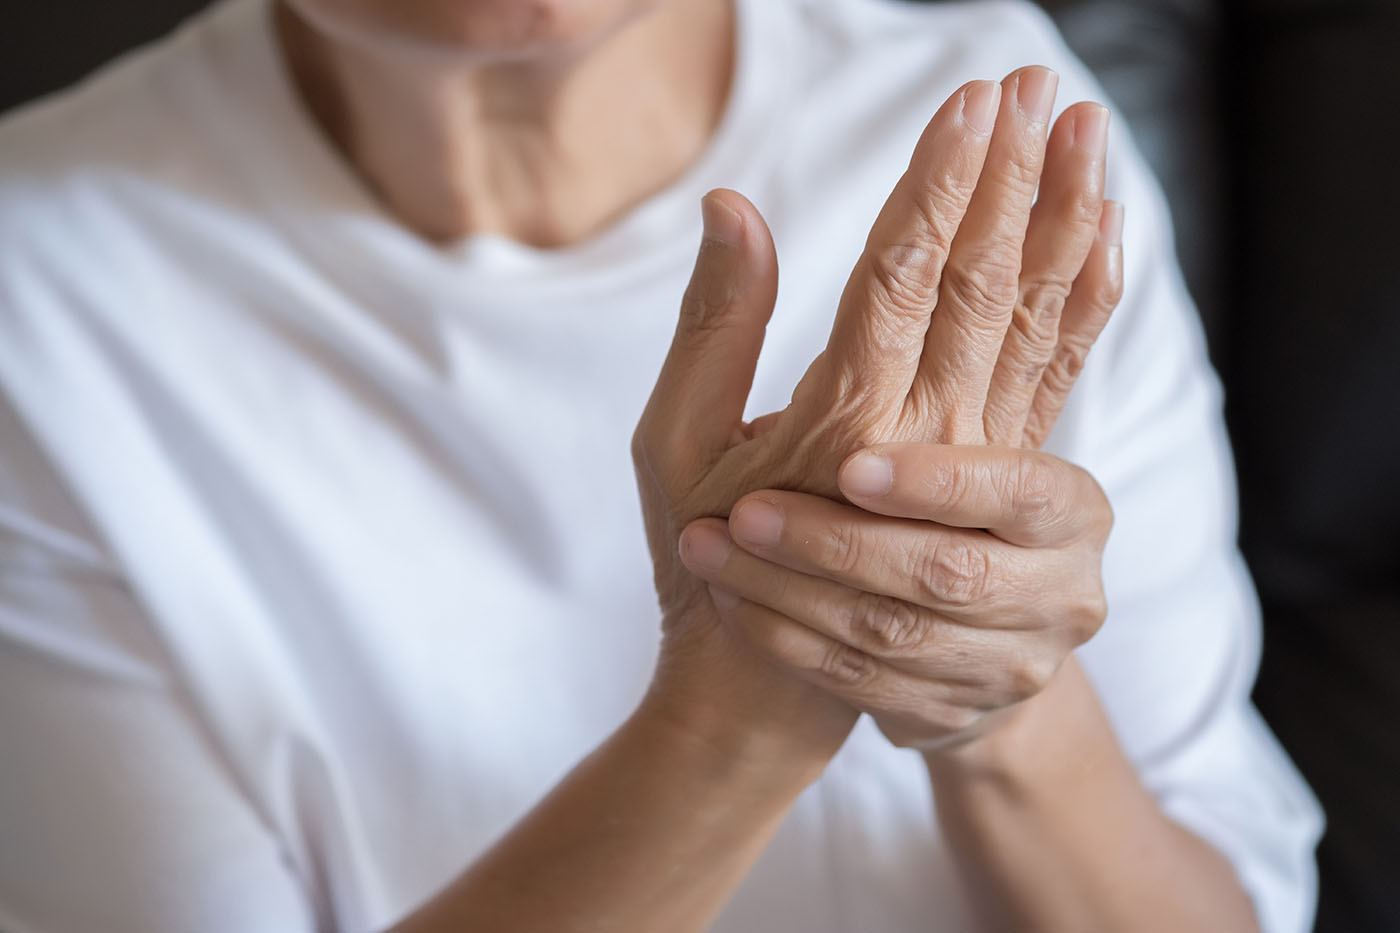 Totul despre artrita: tipuri, simptome, diagnostic, tratament